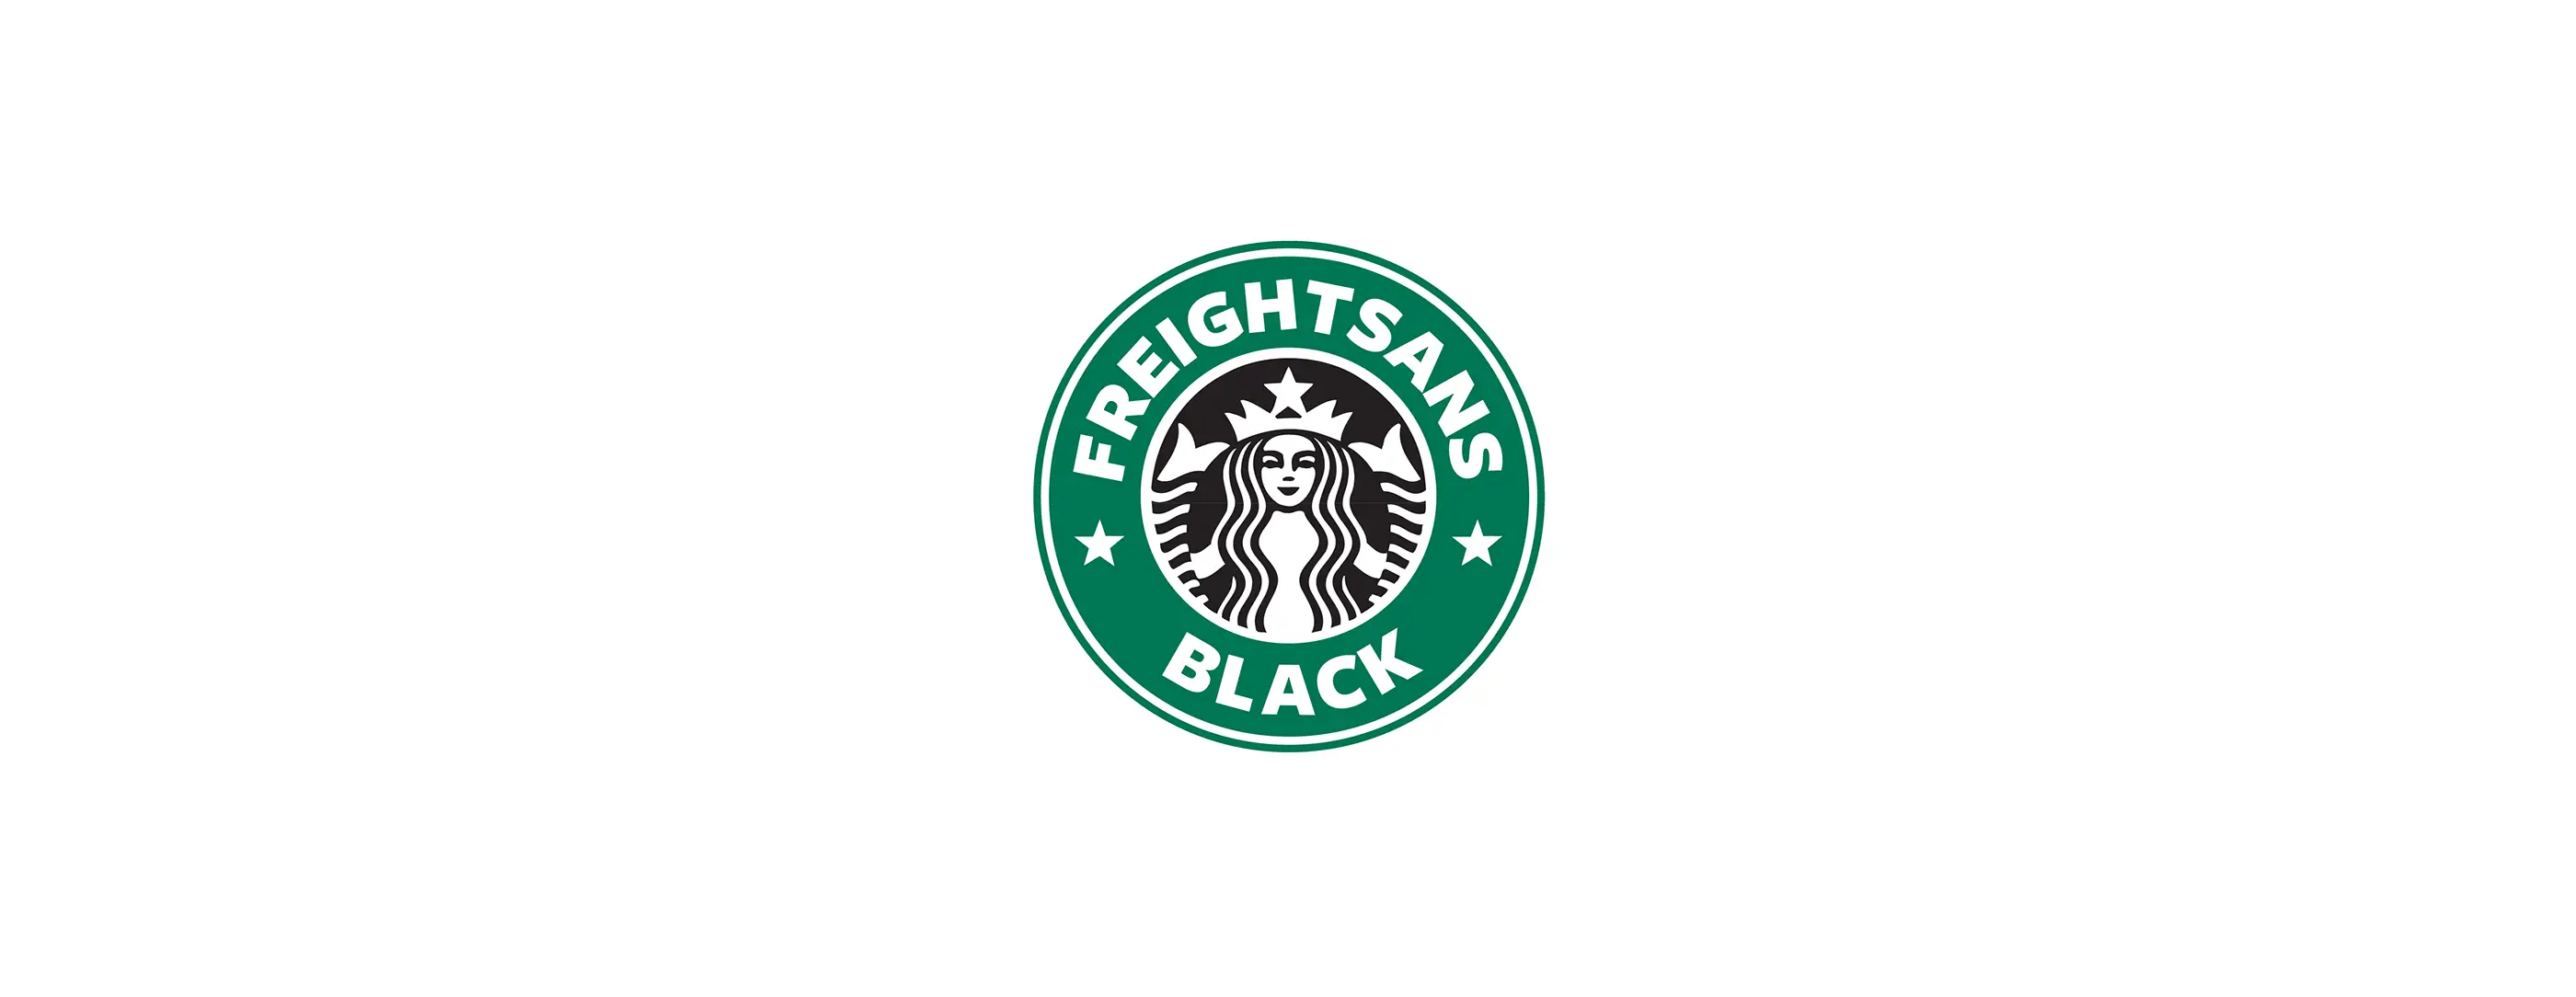 wersm-logo-font-starbucks freightsans black